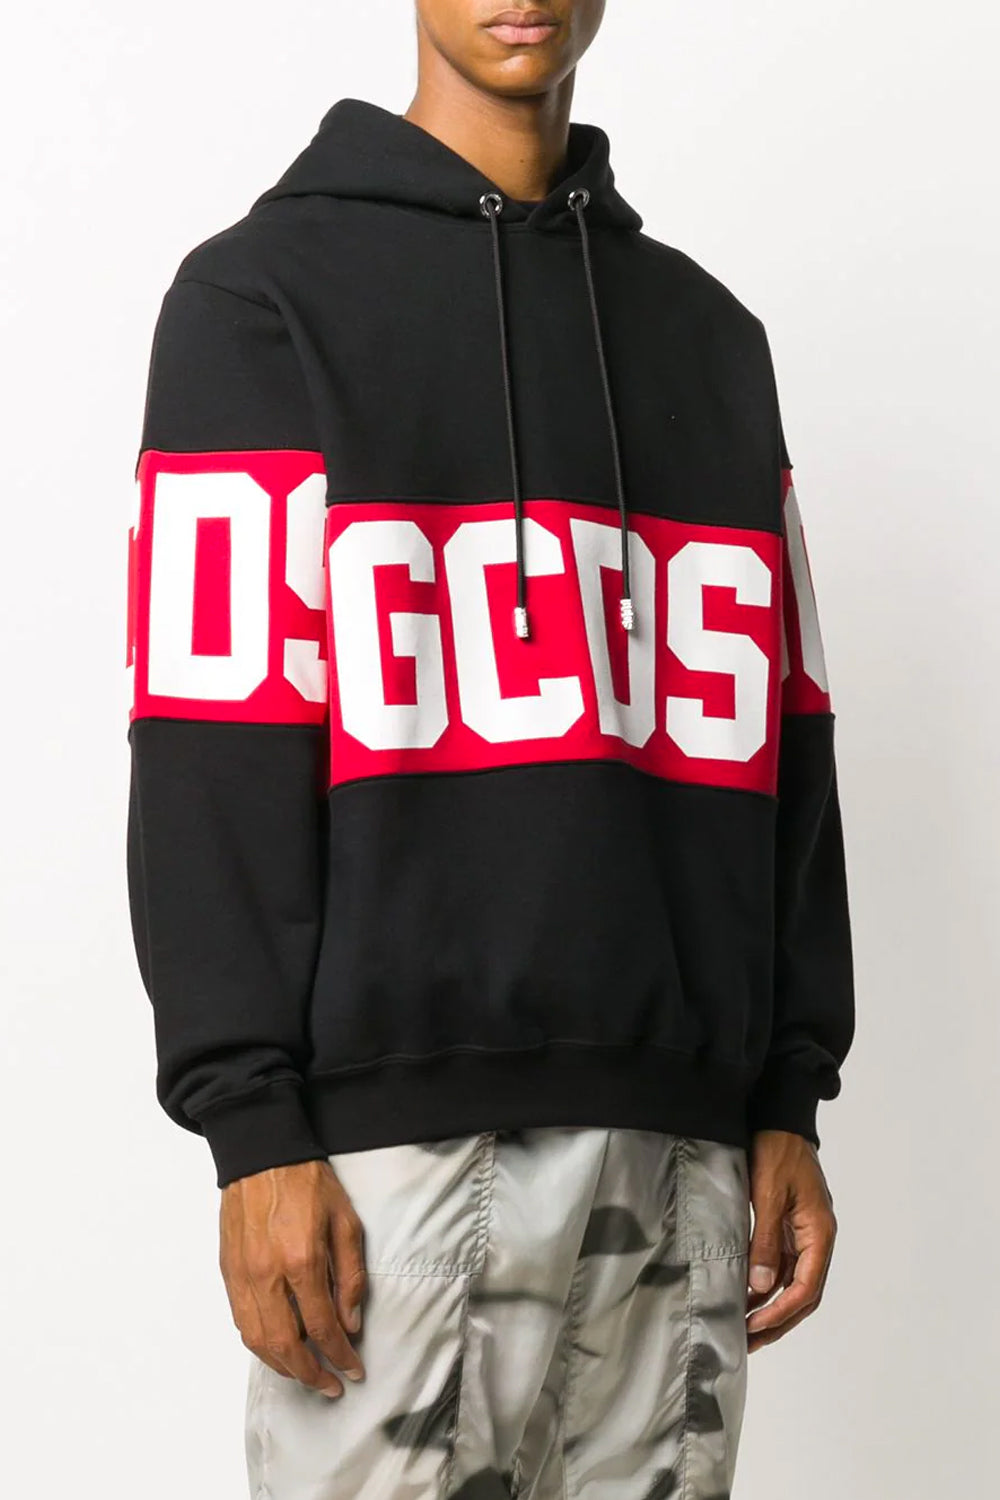 Gcds logo print hoodie